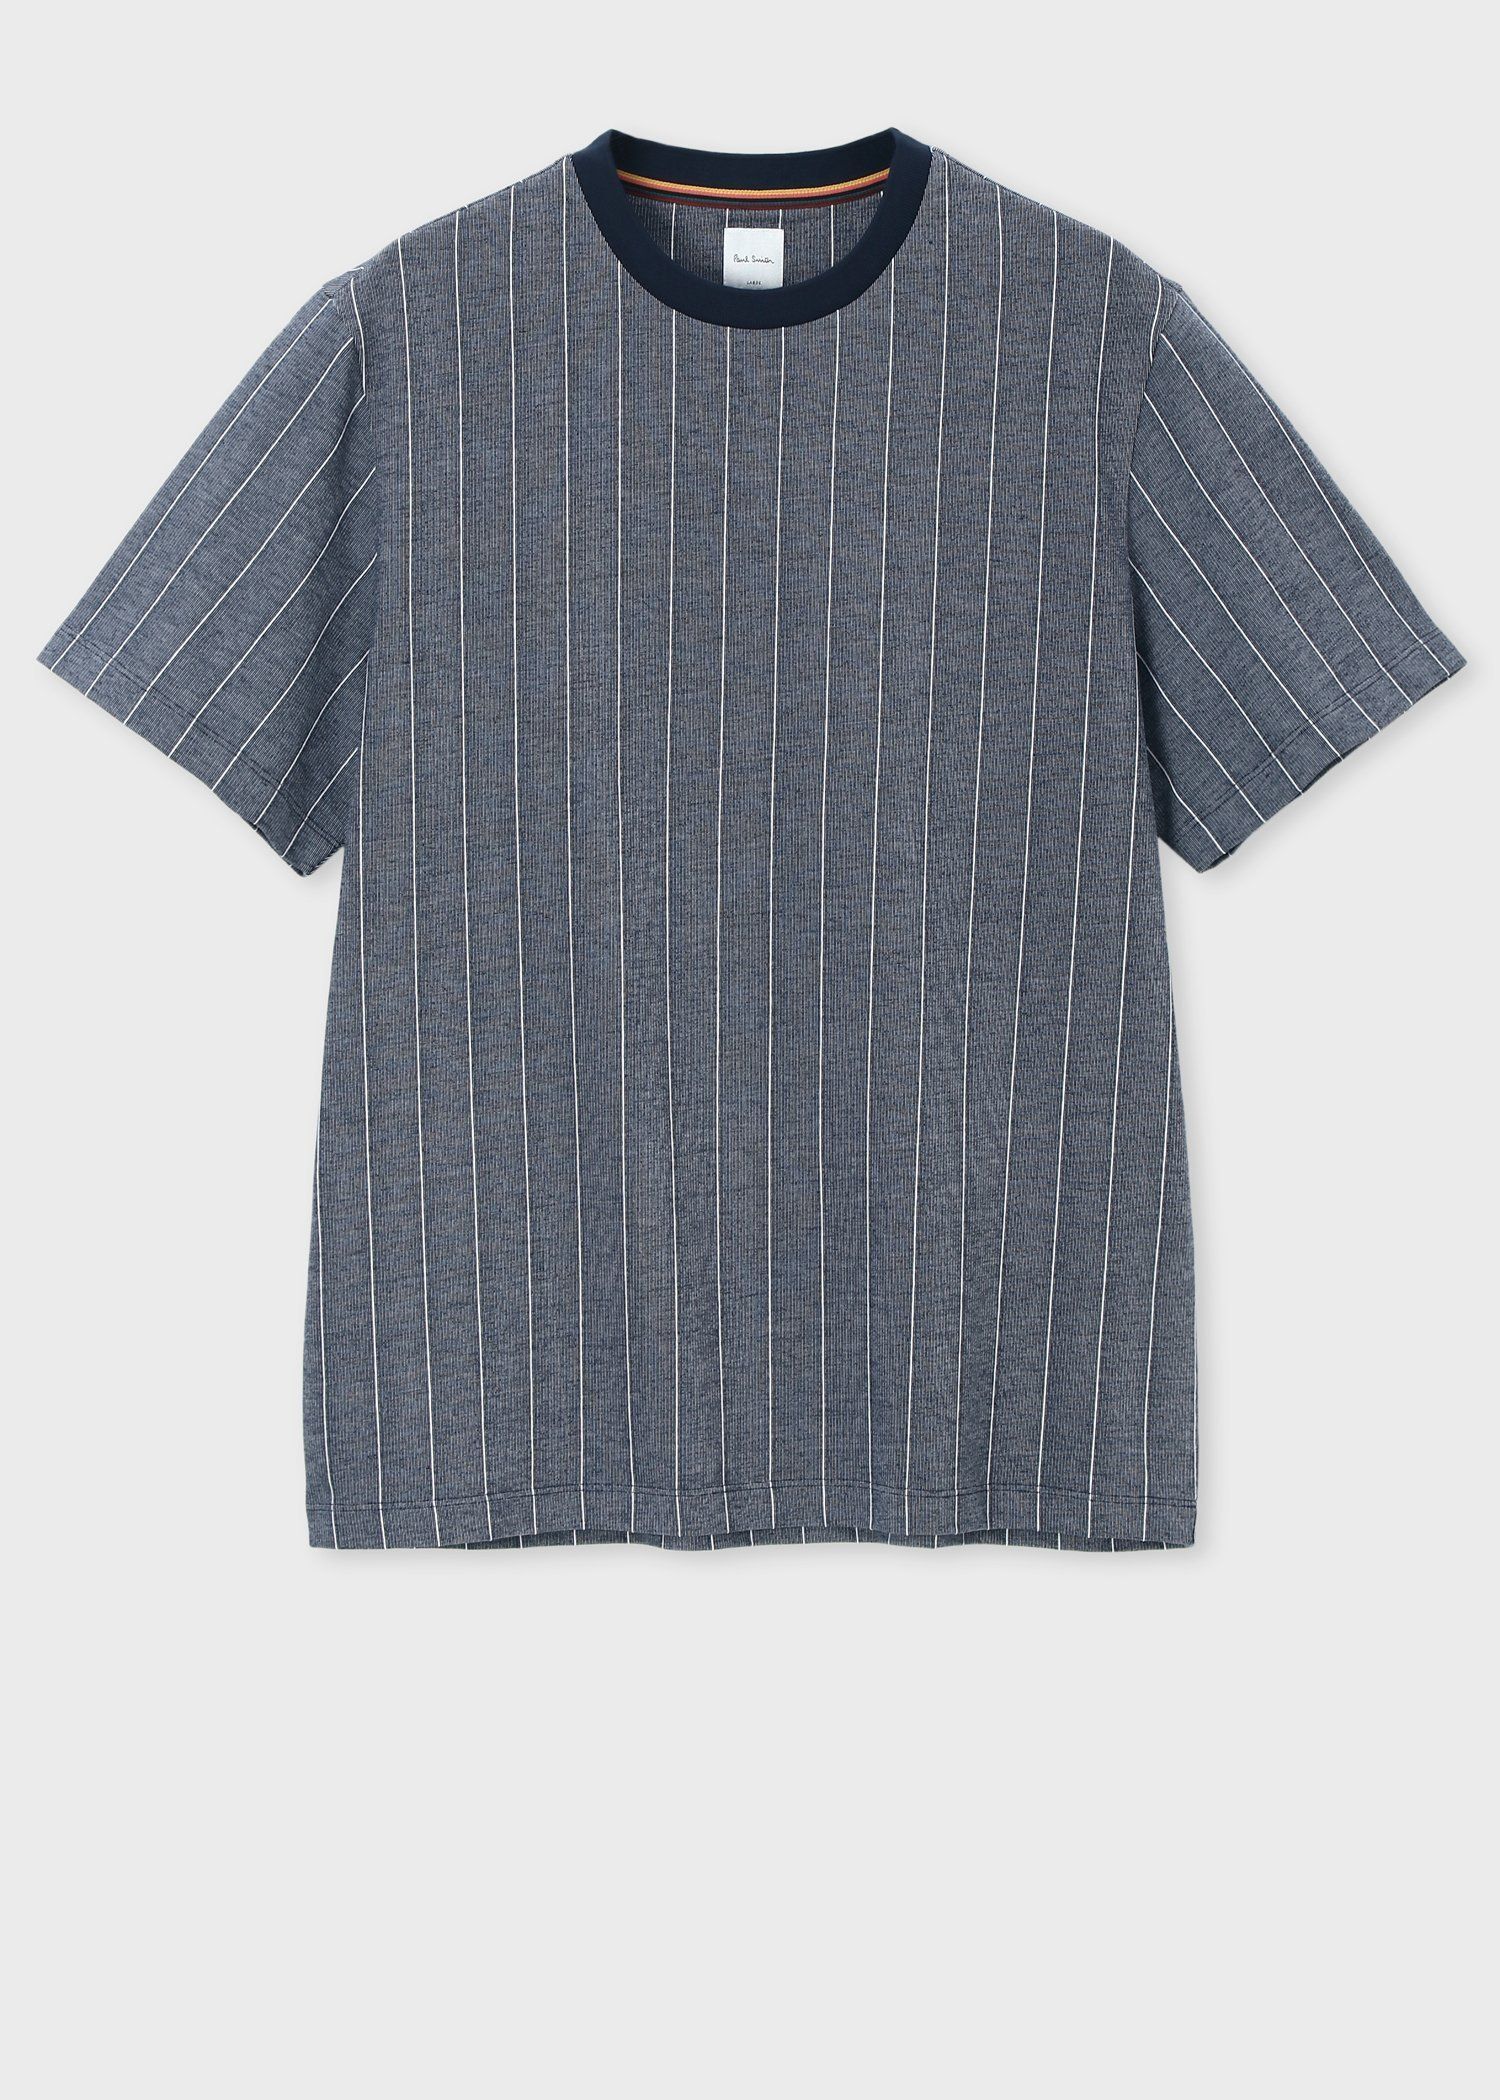 "Jacquard Stripe" 半袖Tシャツ